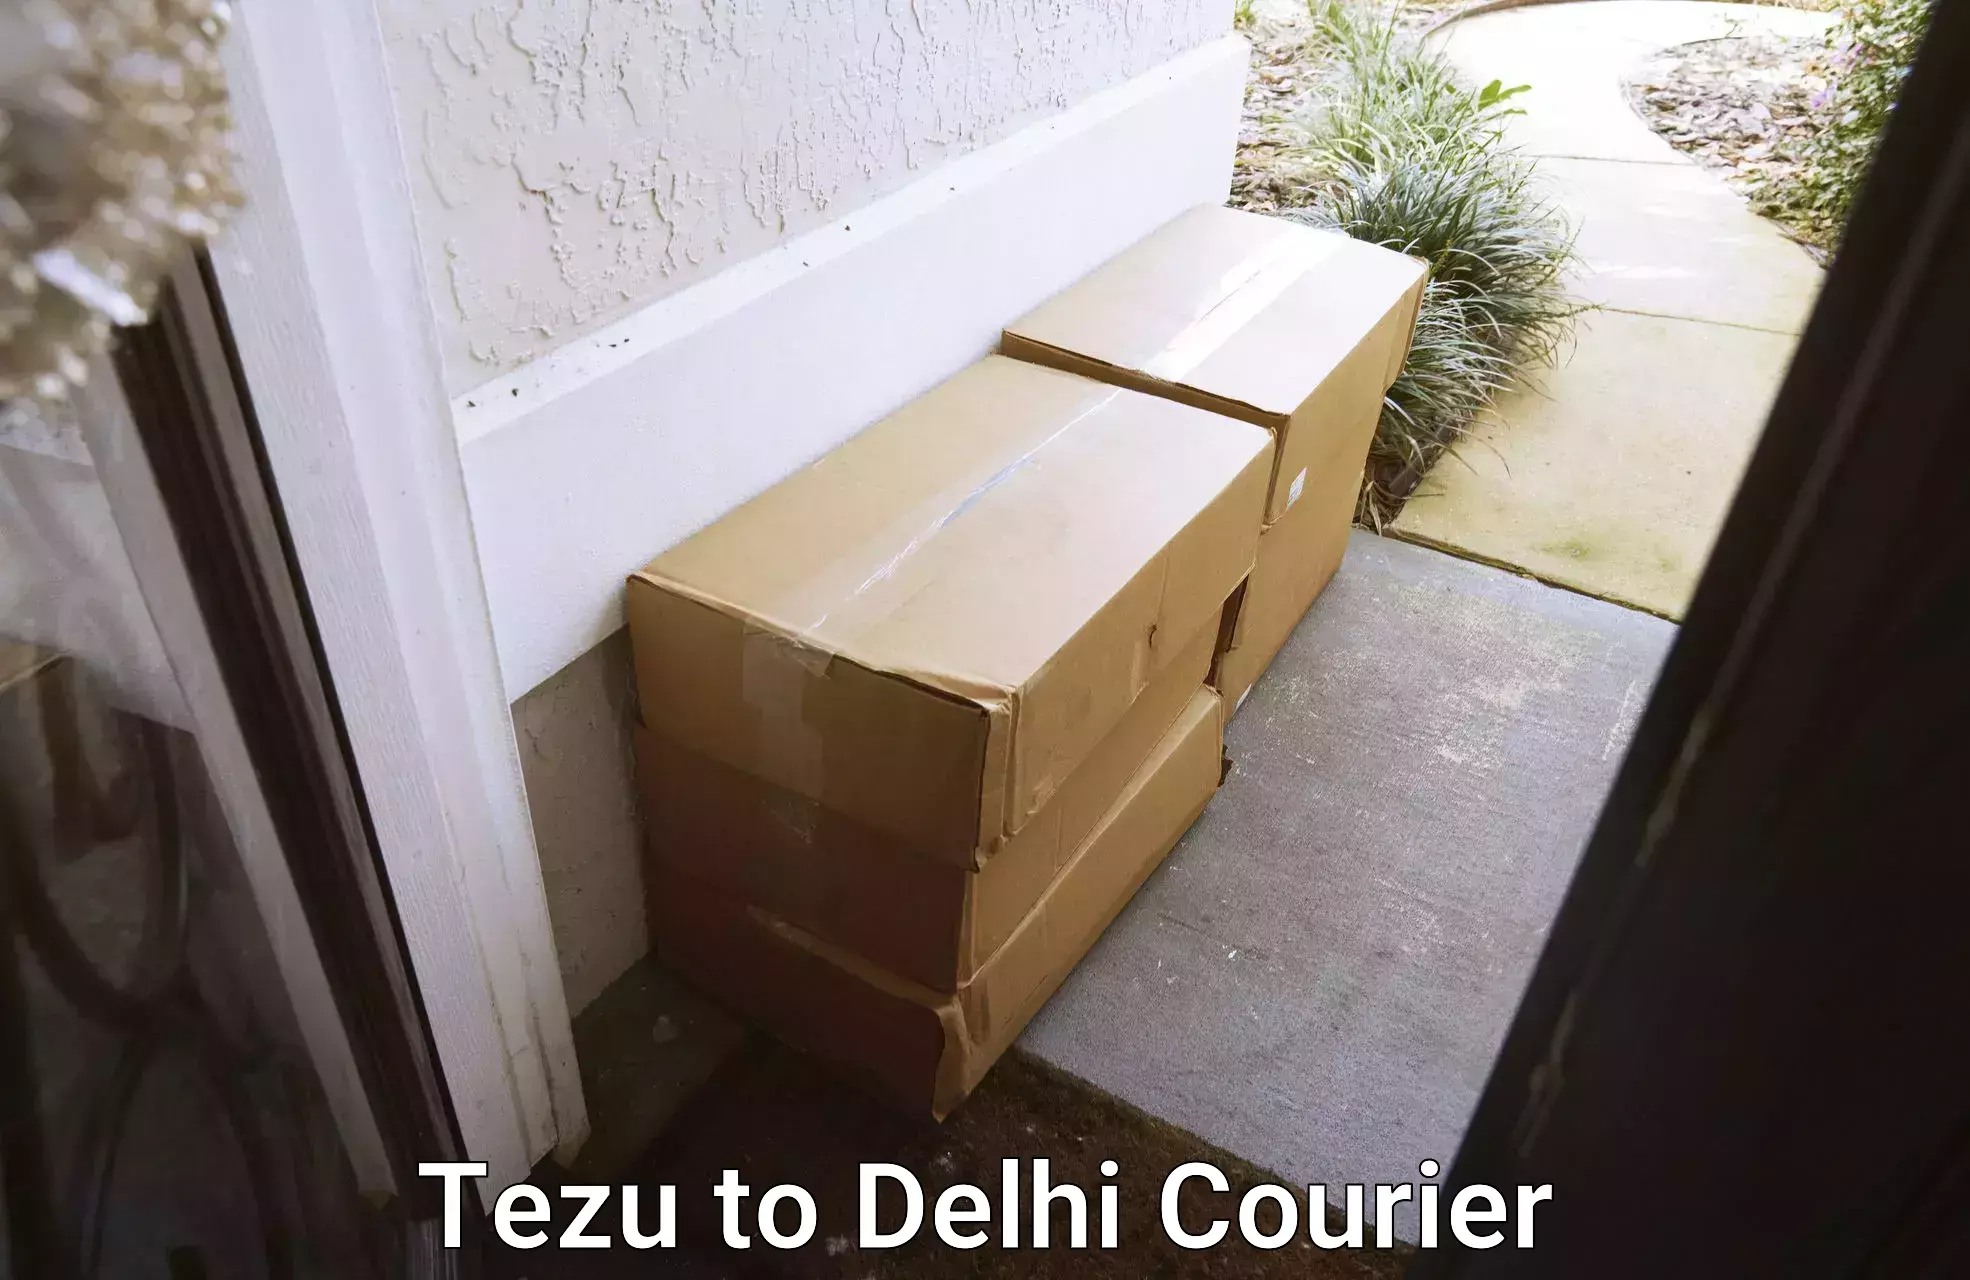 Courier service comparison Tezu to Ramesh Nagar